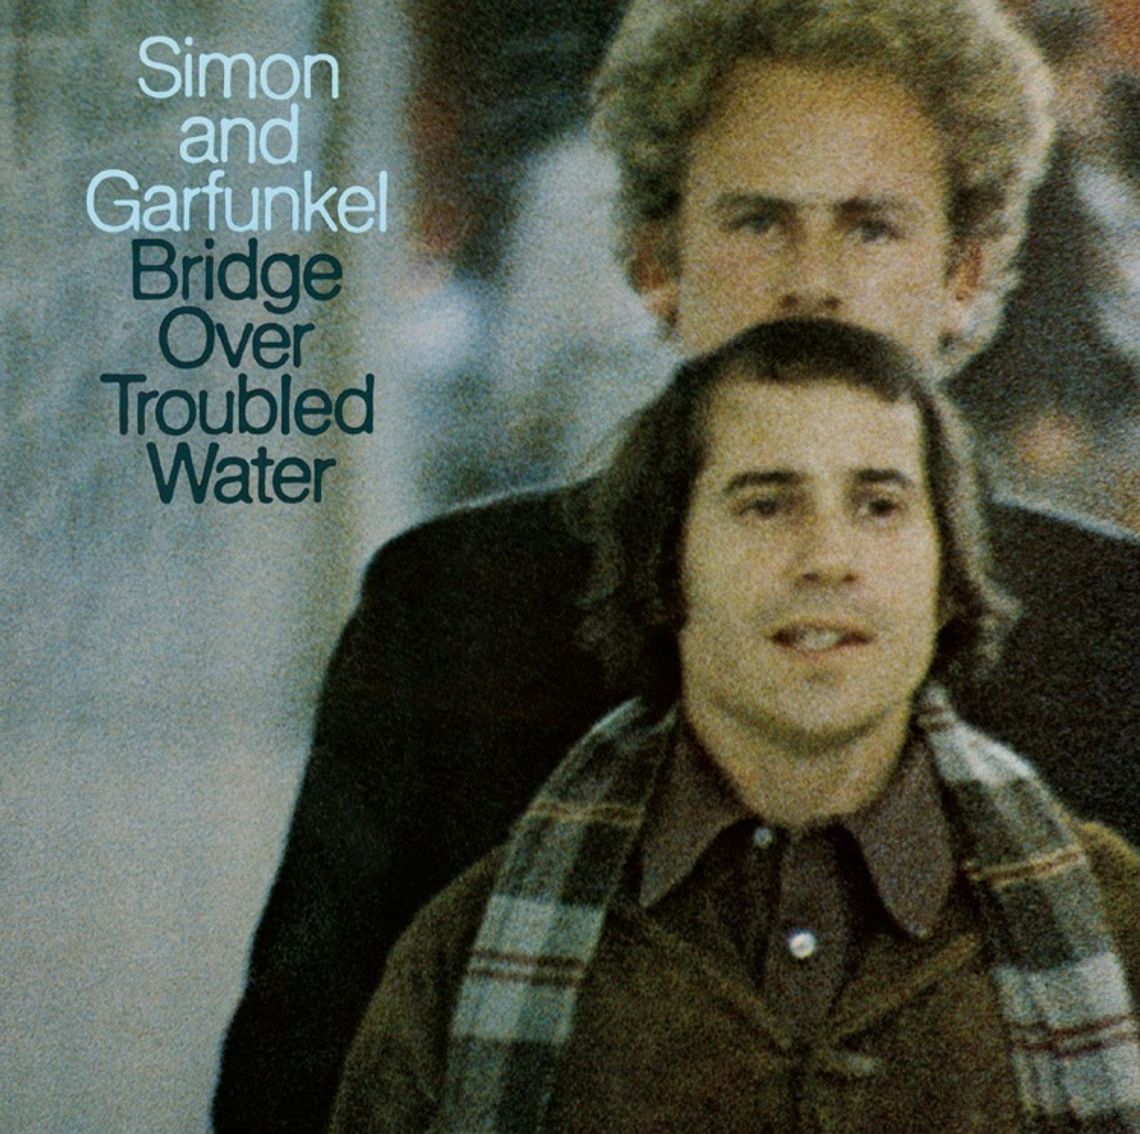 SIMON & GARFUNKEL "Bridge over troubled water"